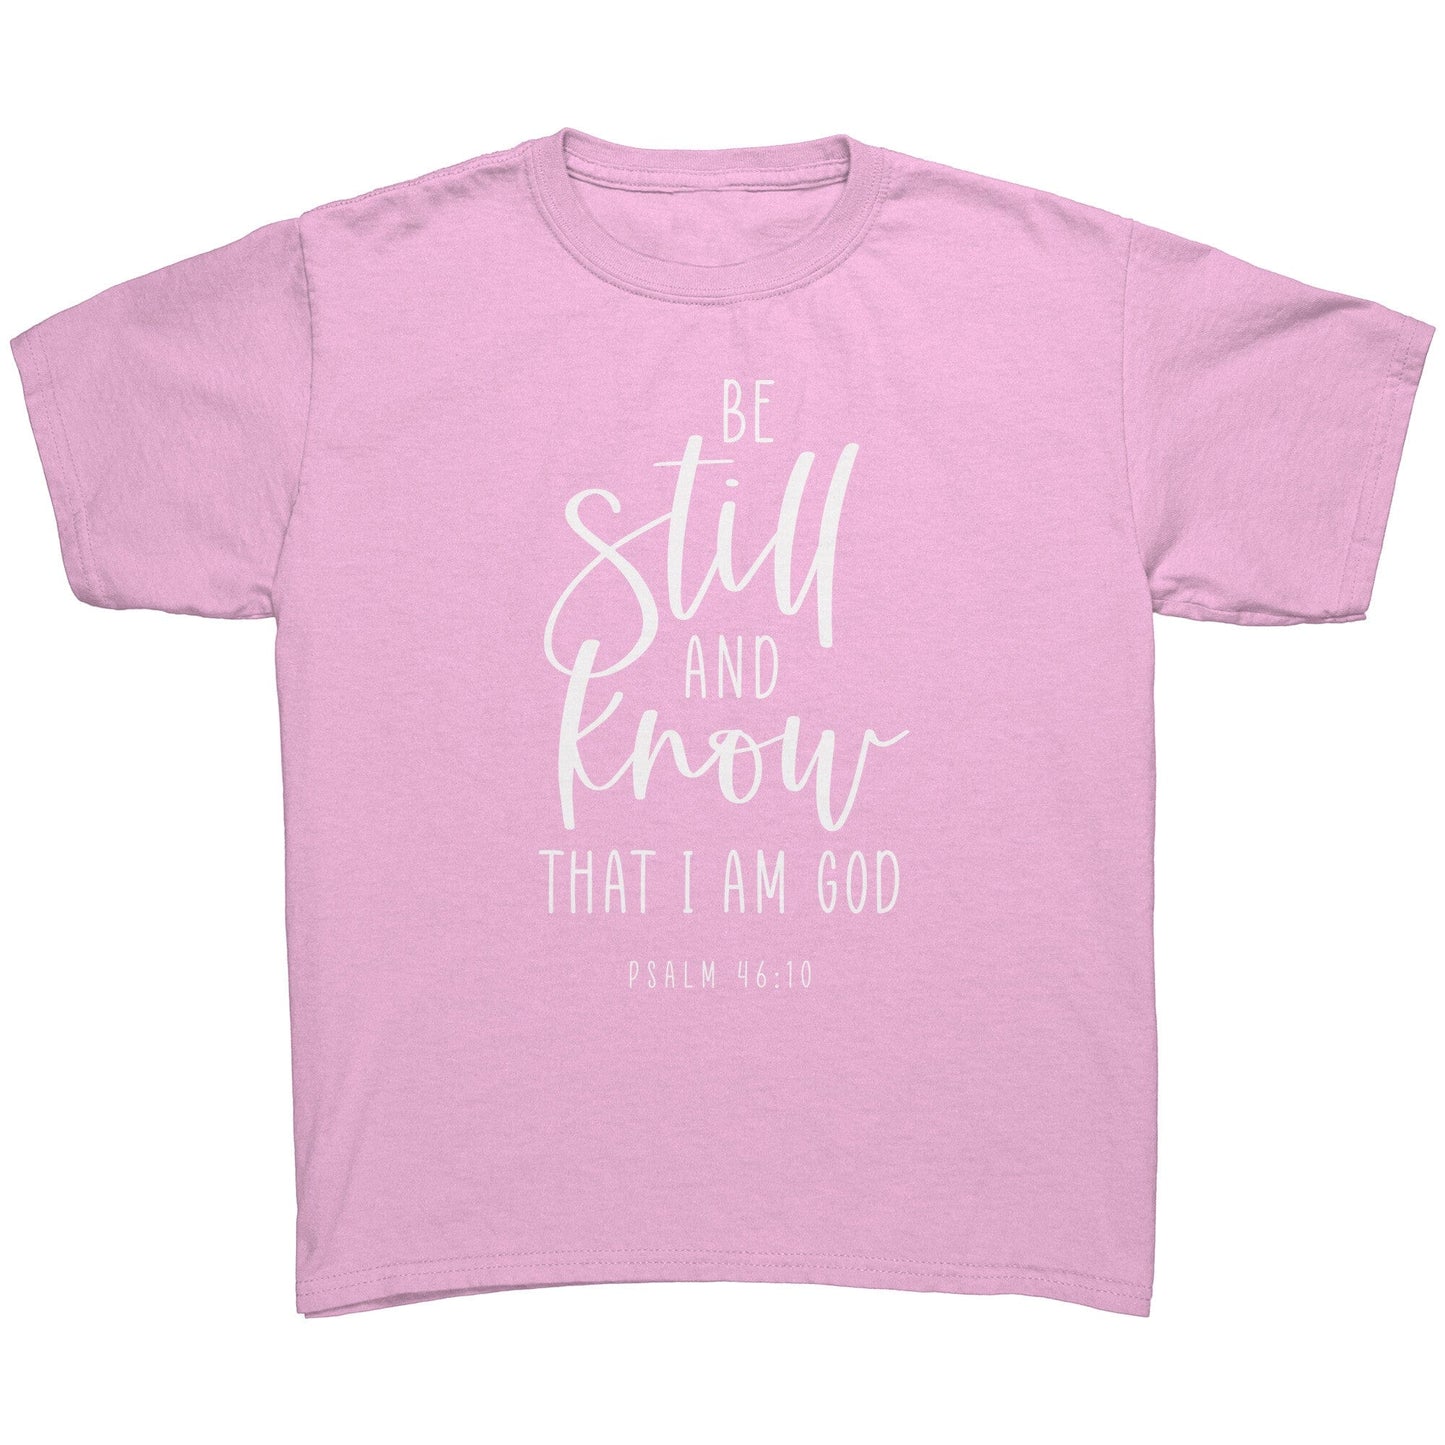 Psalm 46:10 Youth T-Shirt